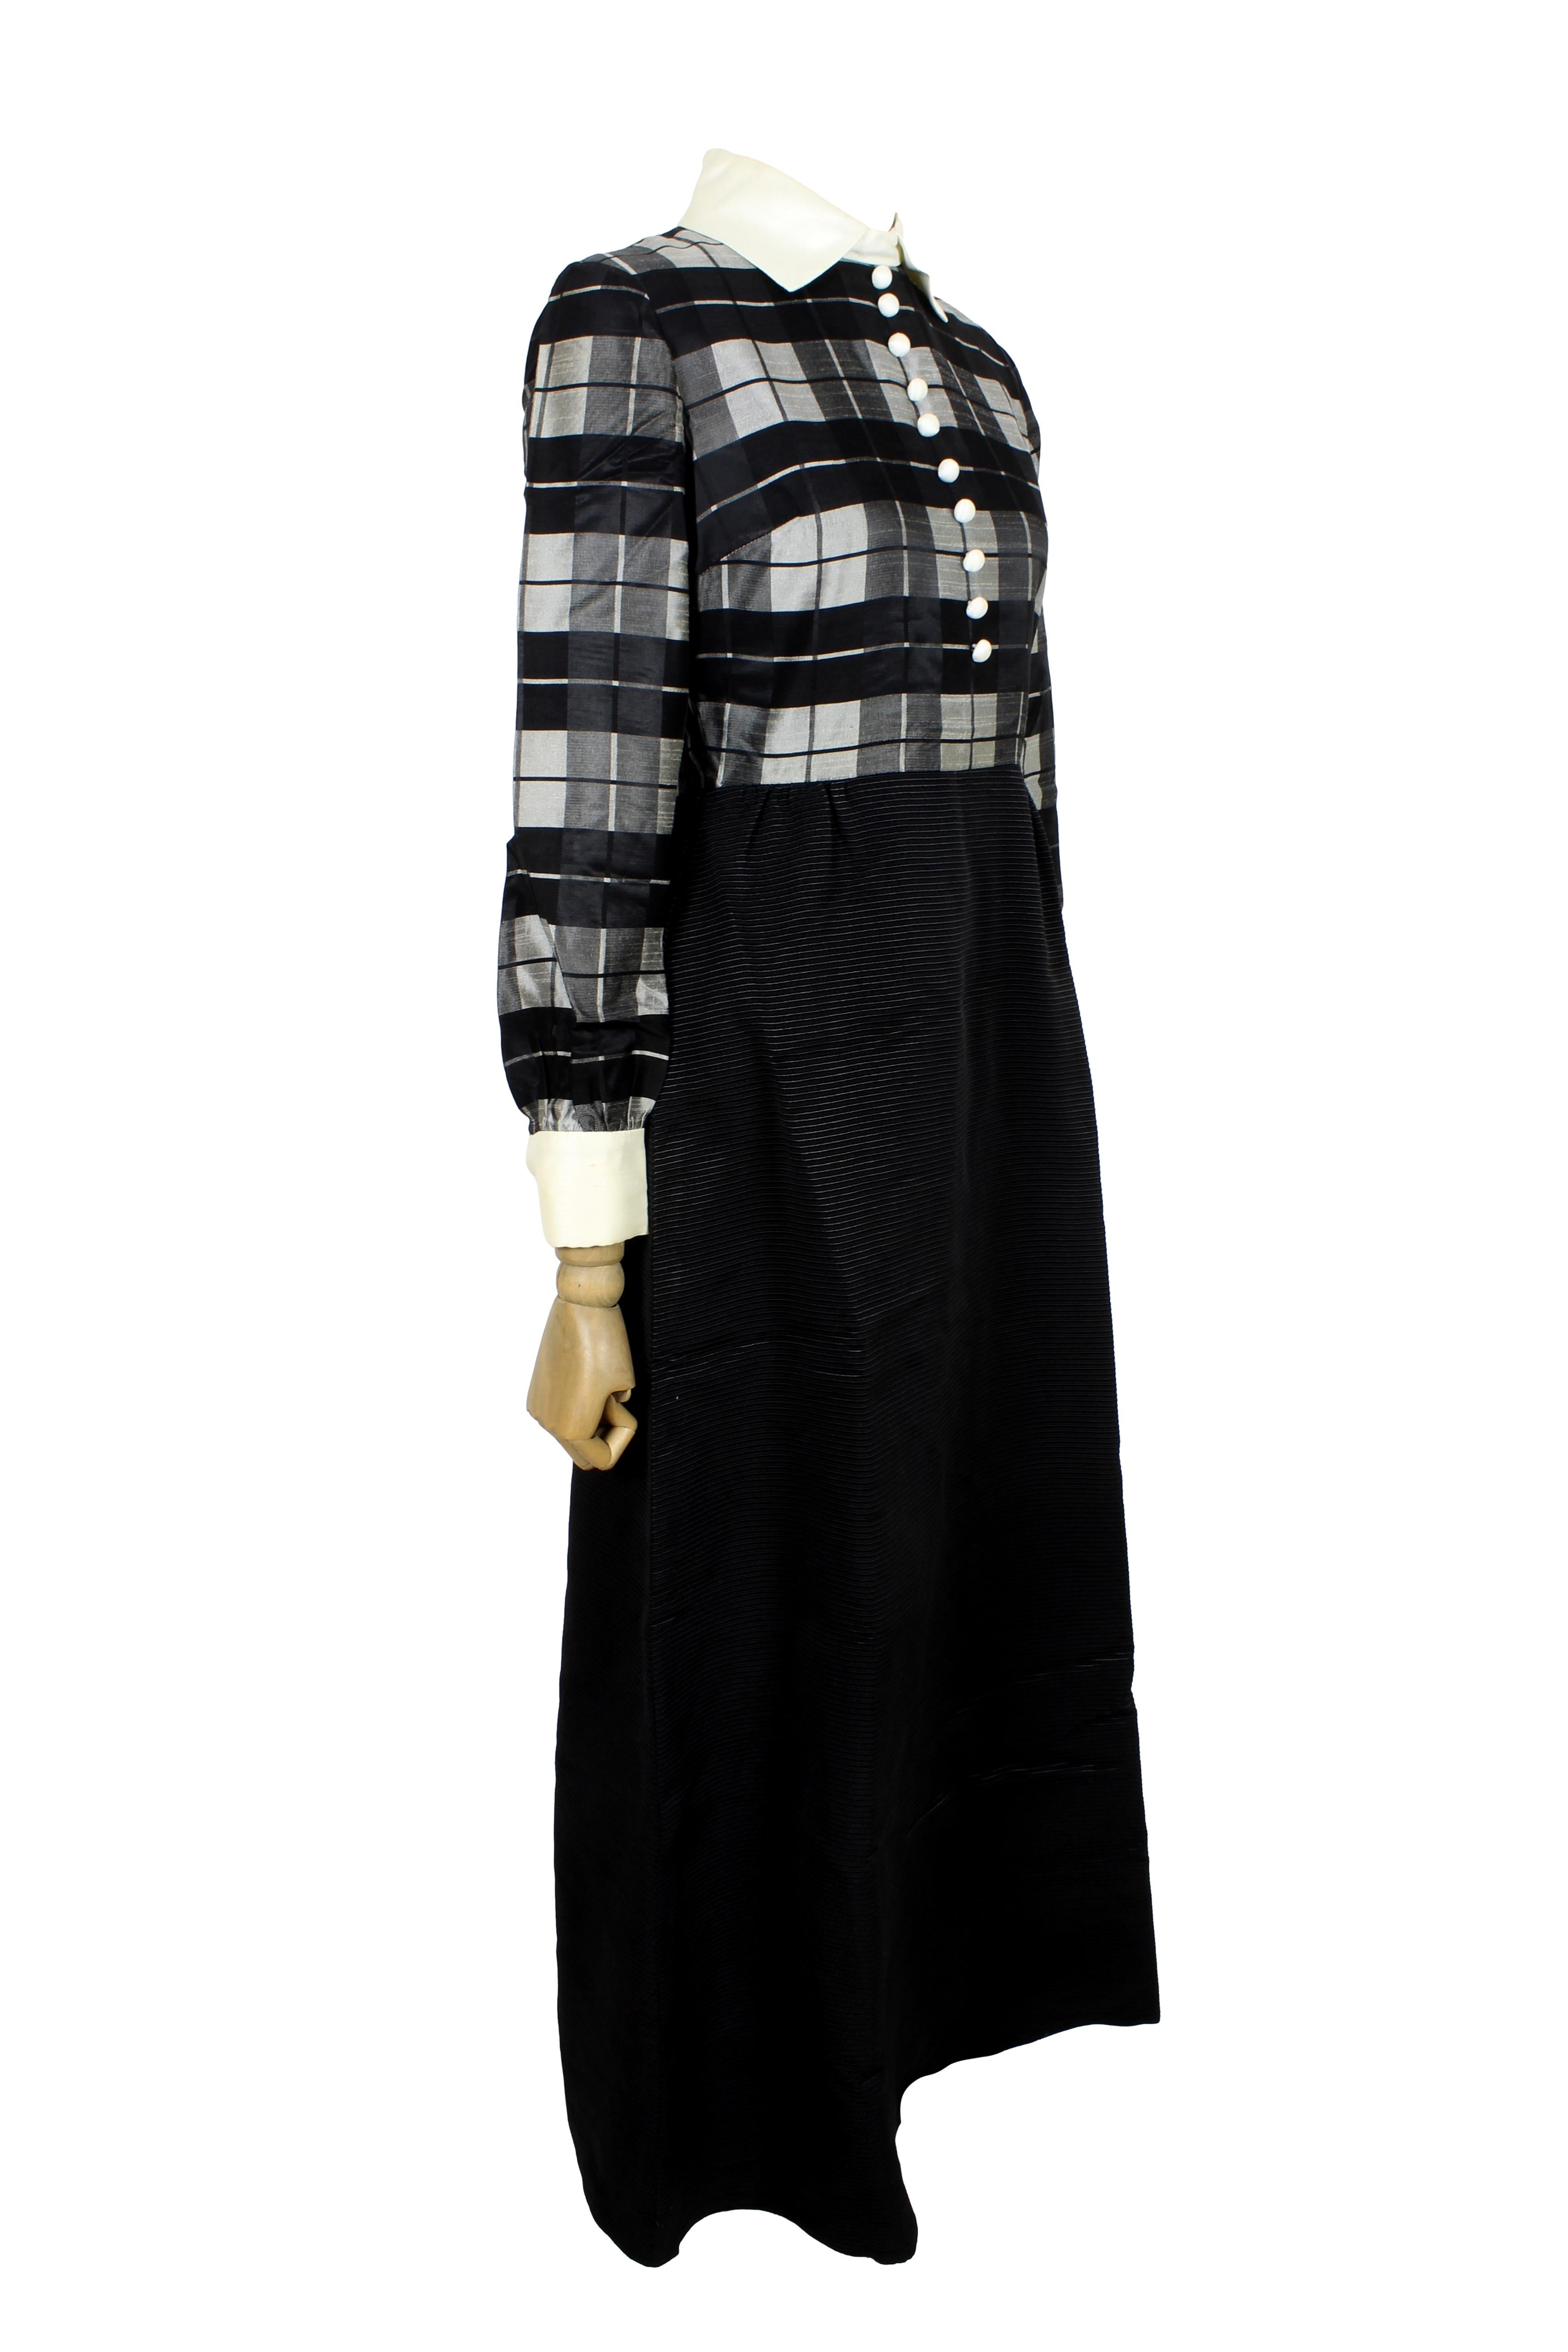 Women's Jean Varon Black Gray Check Long Evening Dress 1970s For Sale